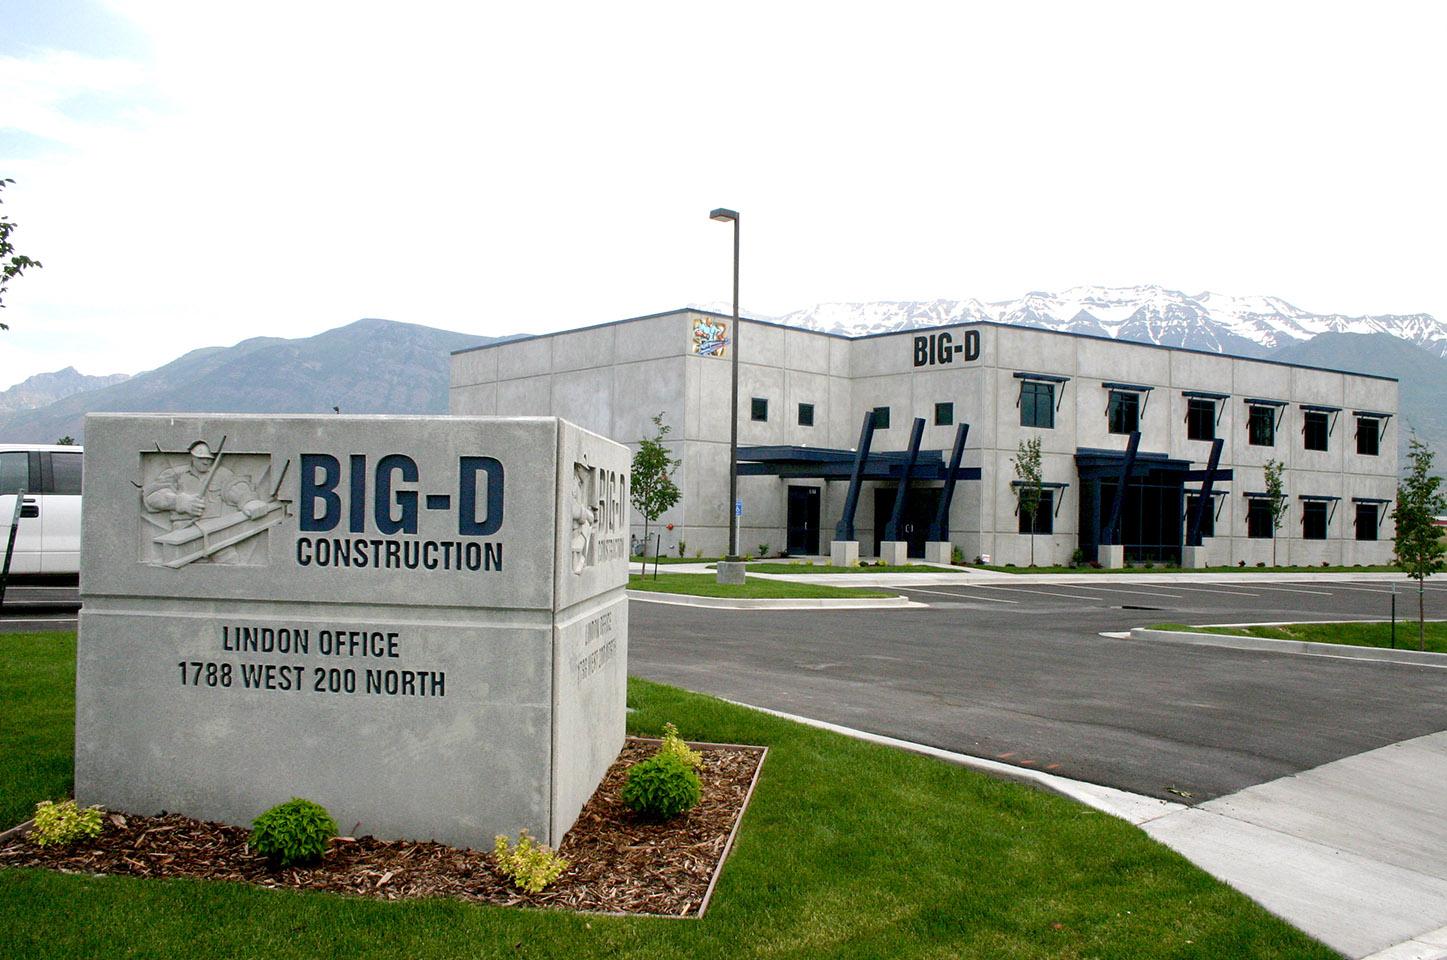 The Big-D office in Lindon, Utah.